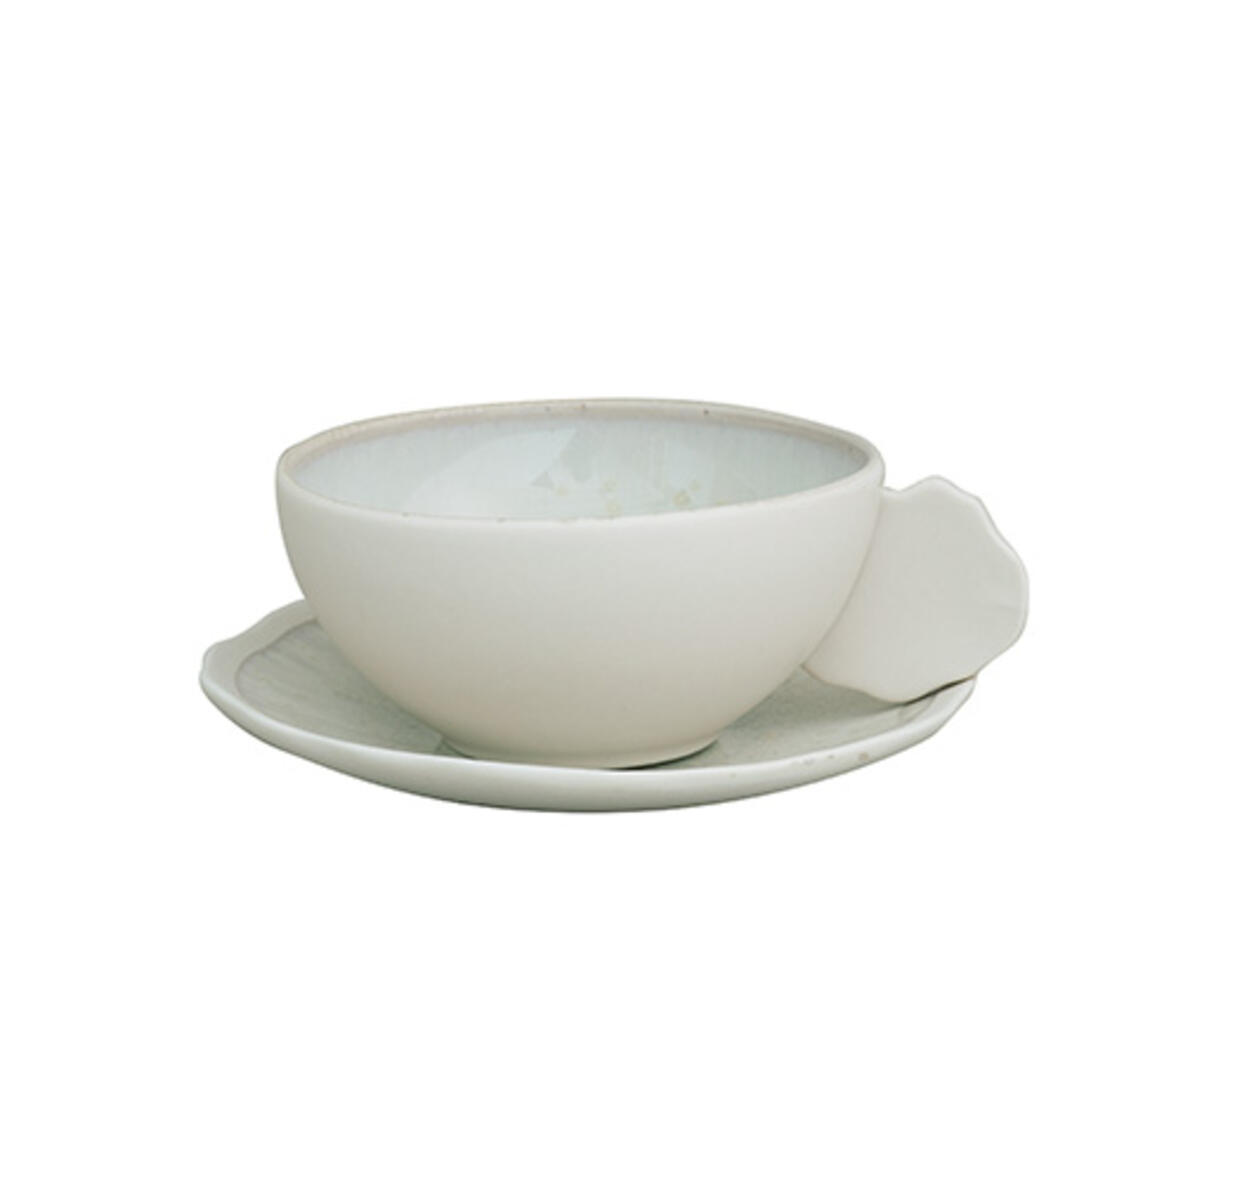 cup & saucer - s plume nacre ceramic manufacturer